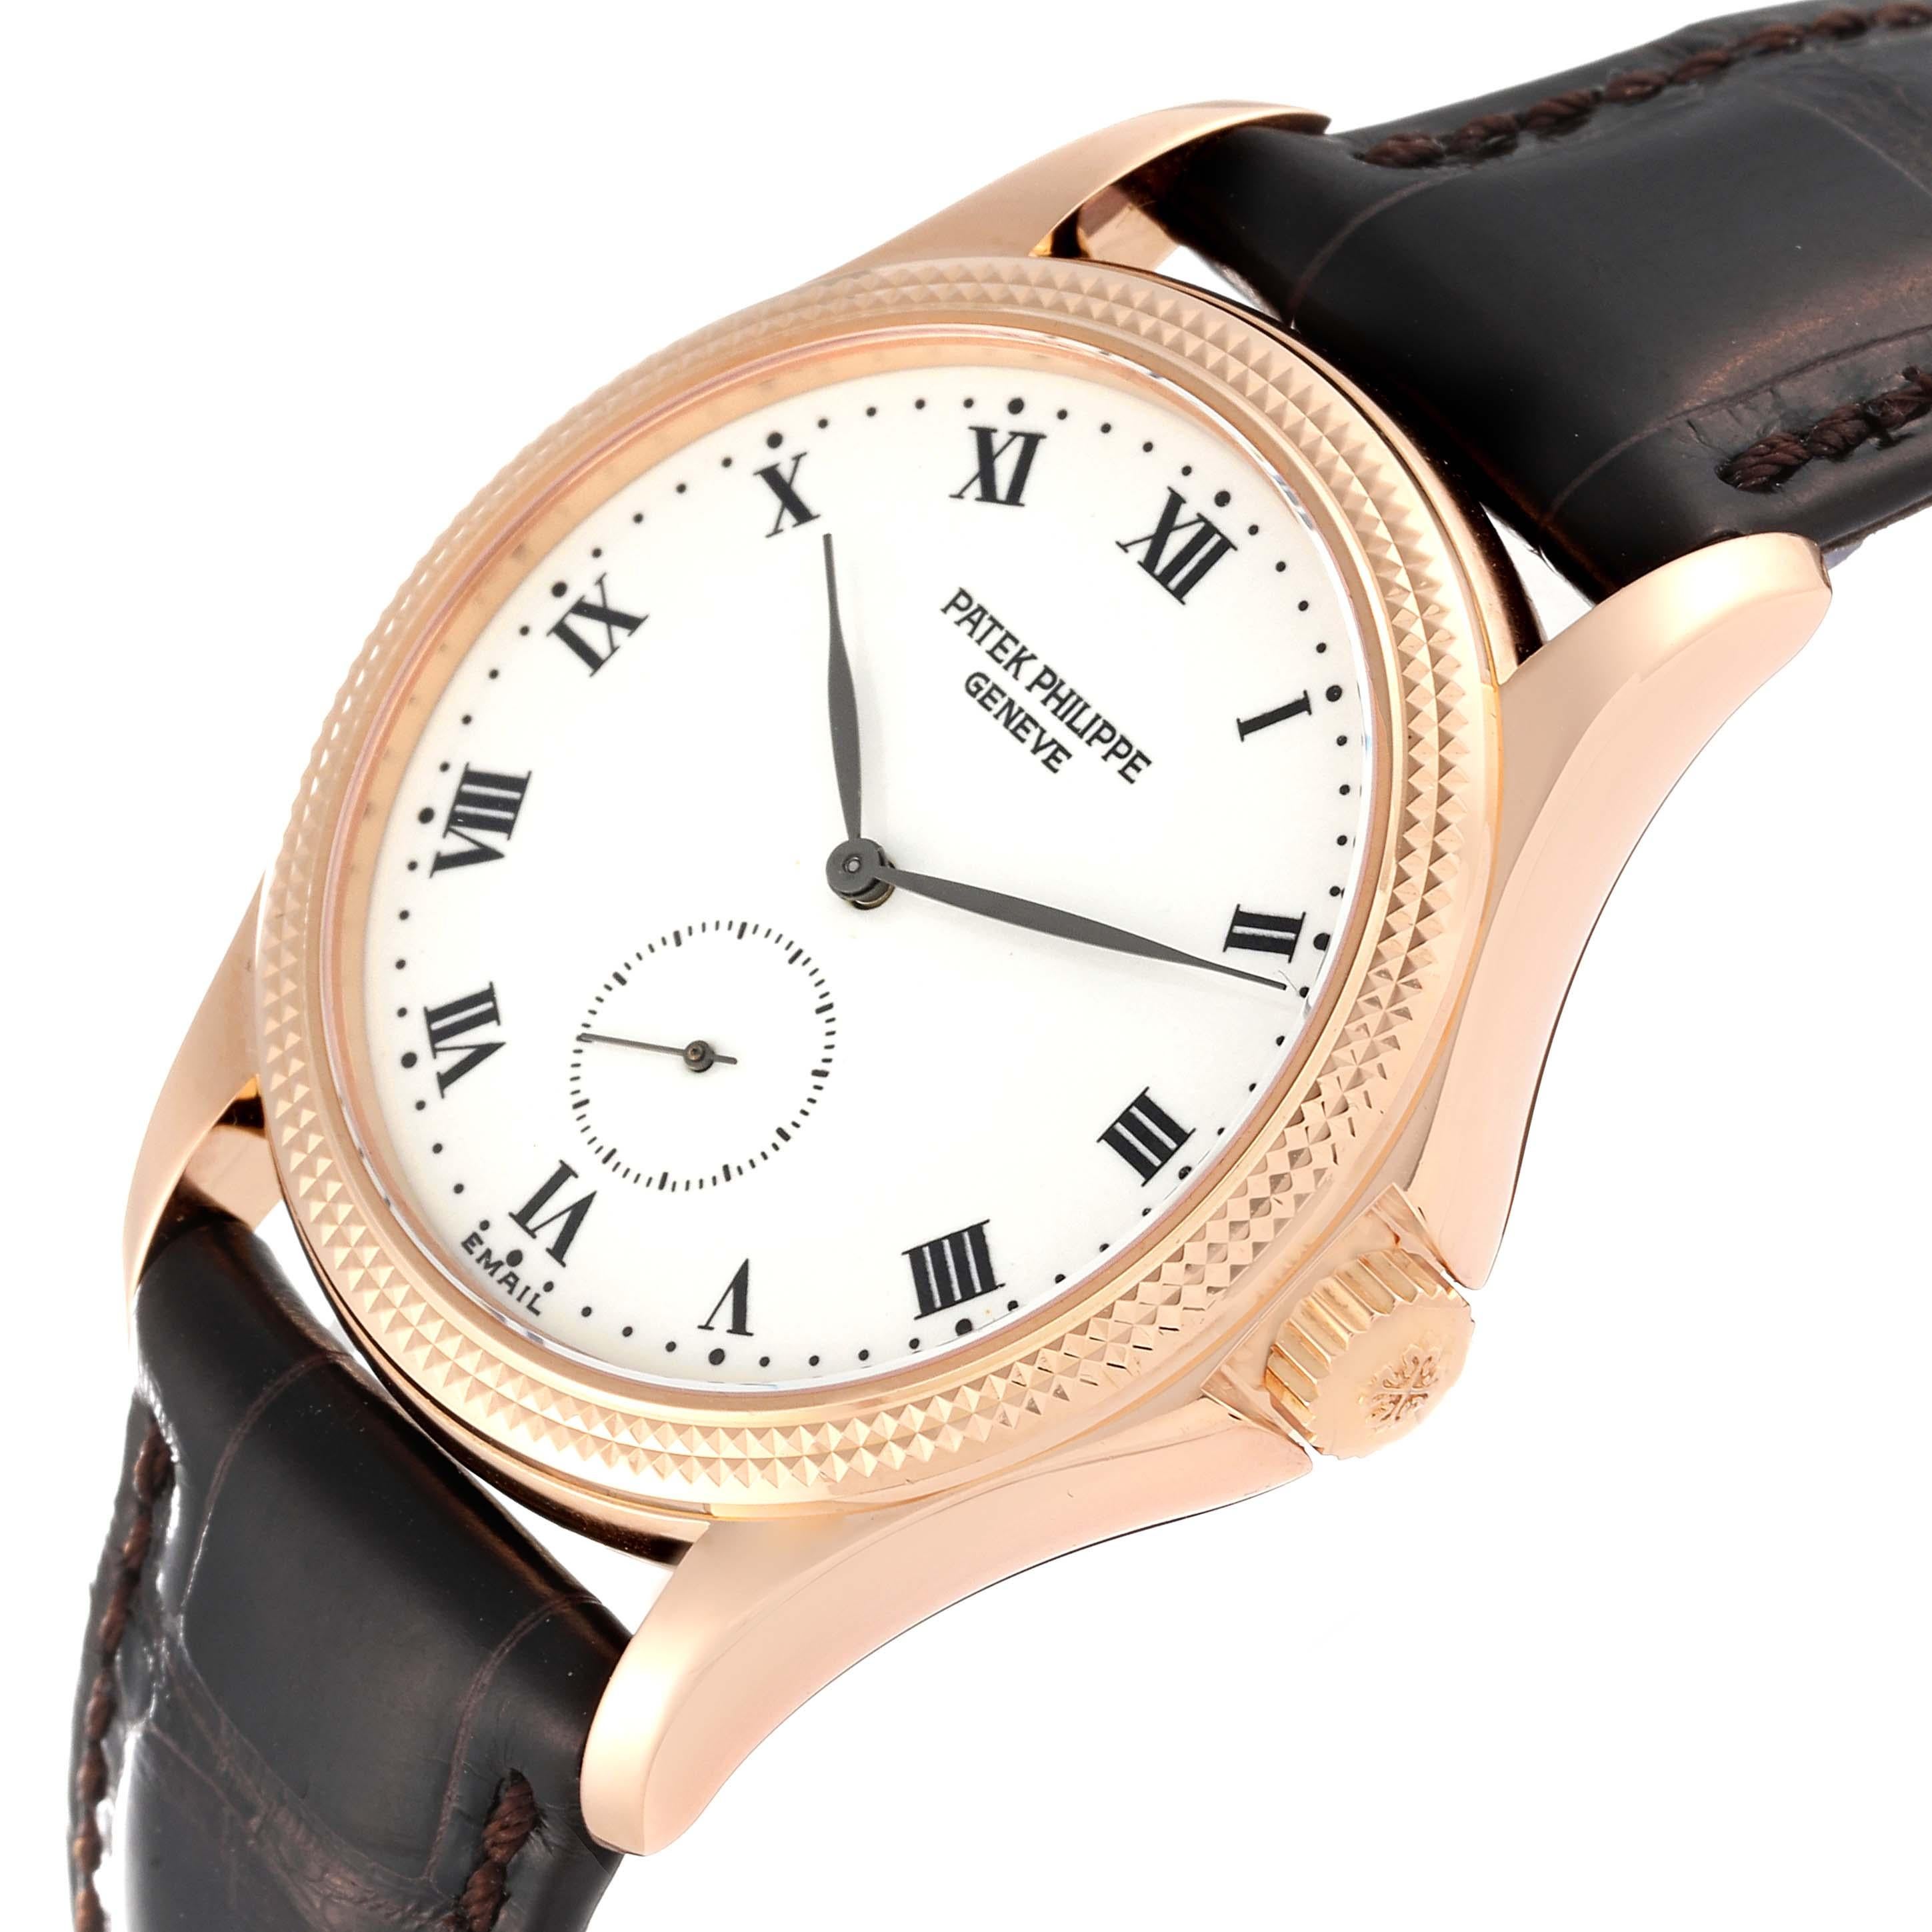 Patek Philippe Calatrava Rose Gold White Dial Mens Watch 5115 For Sale 3